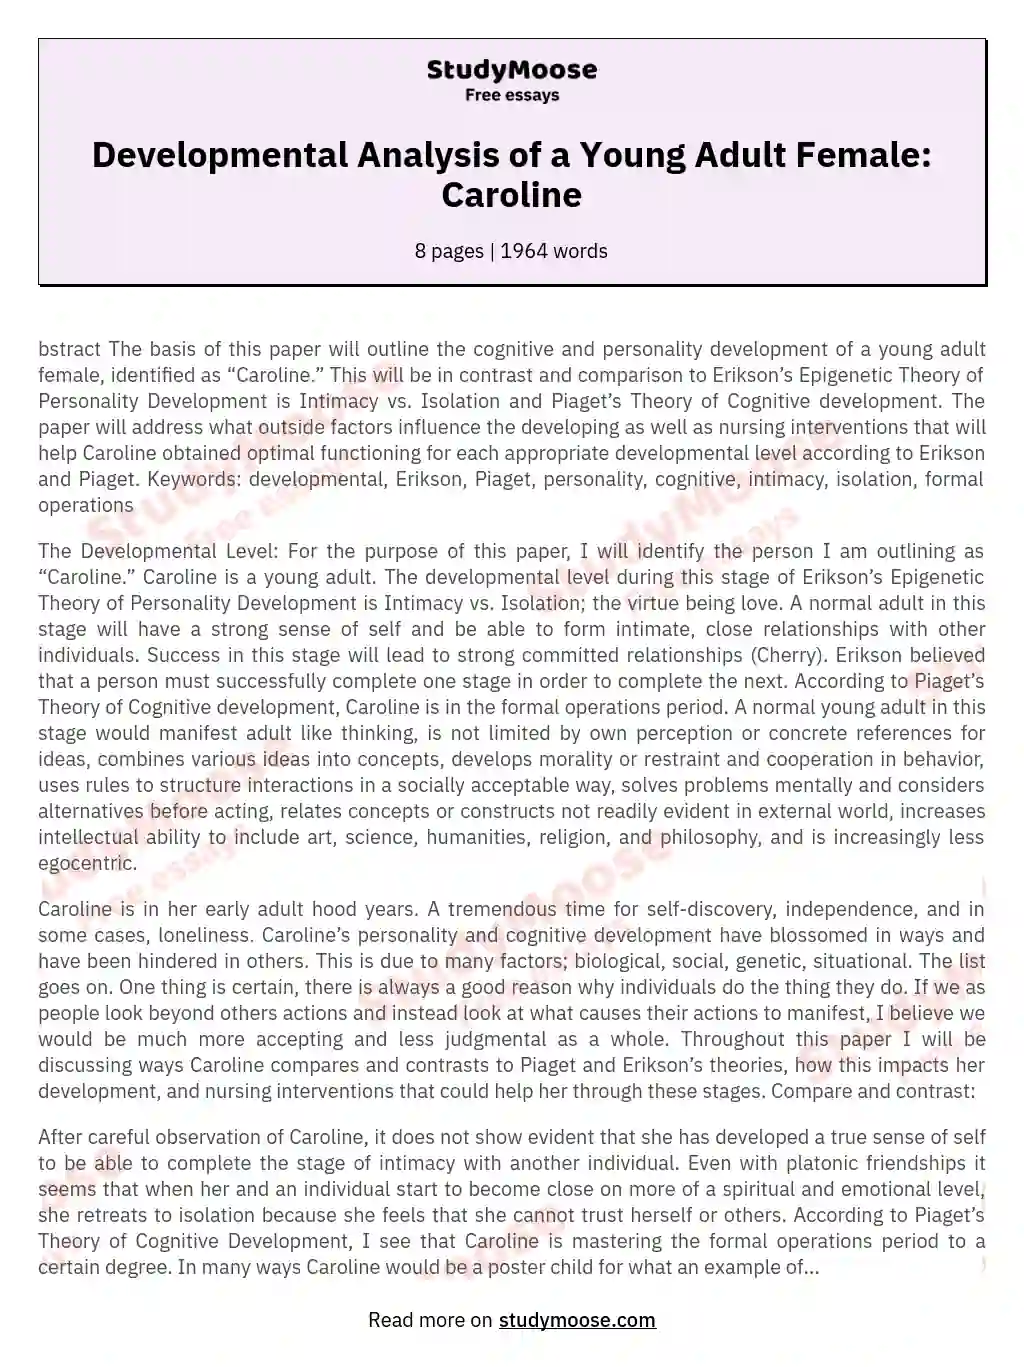 Developmental Analysis of a Young Adult Female: Caroline essay